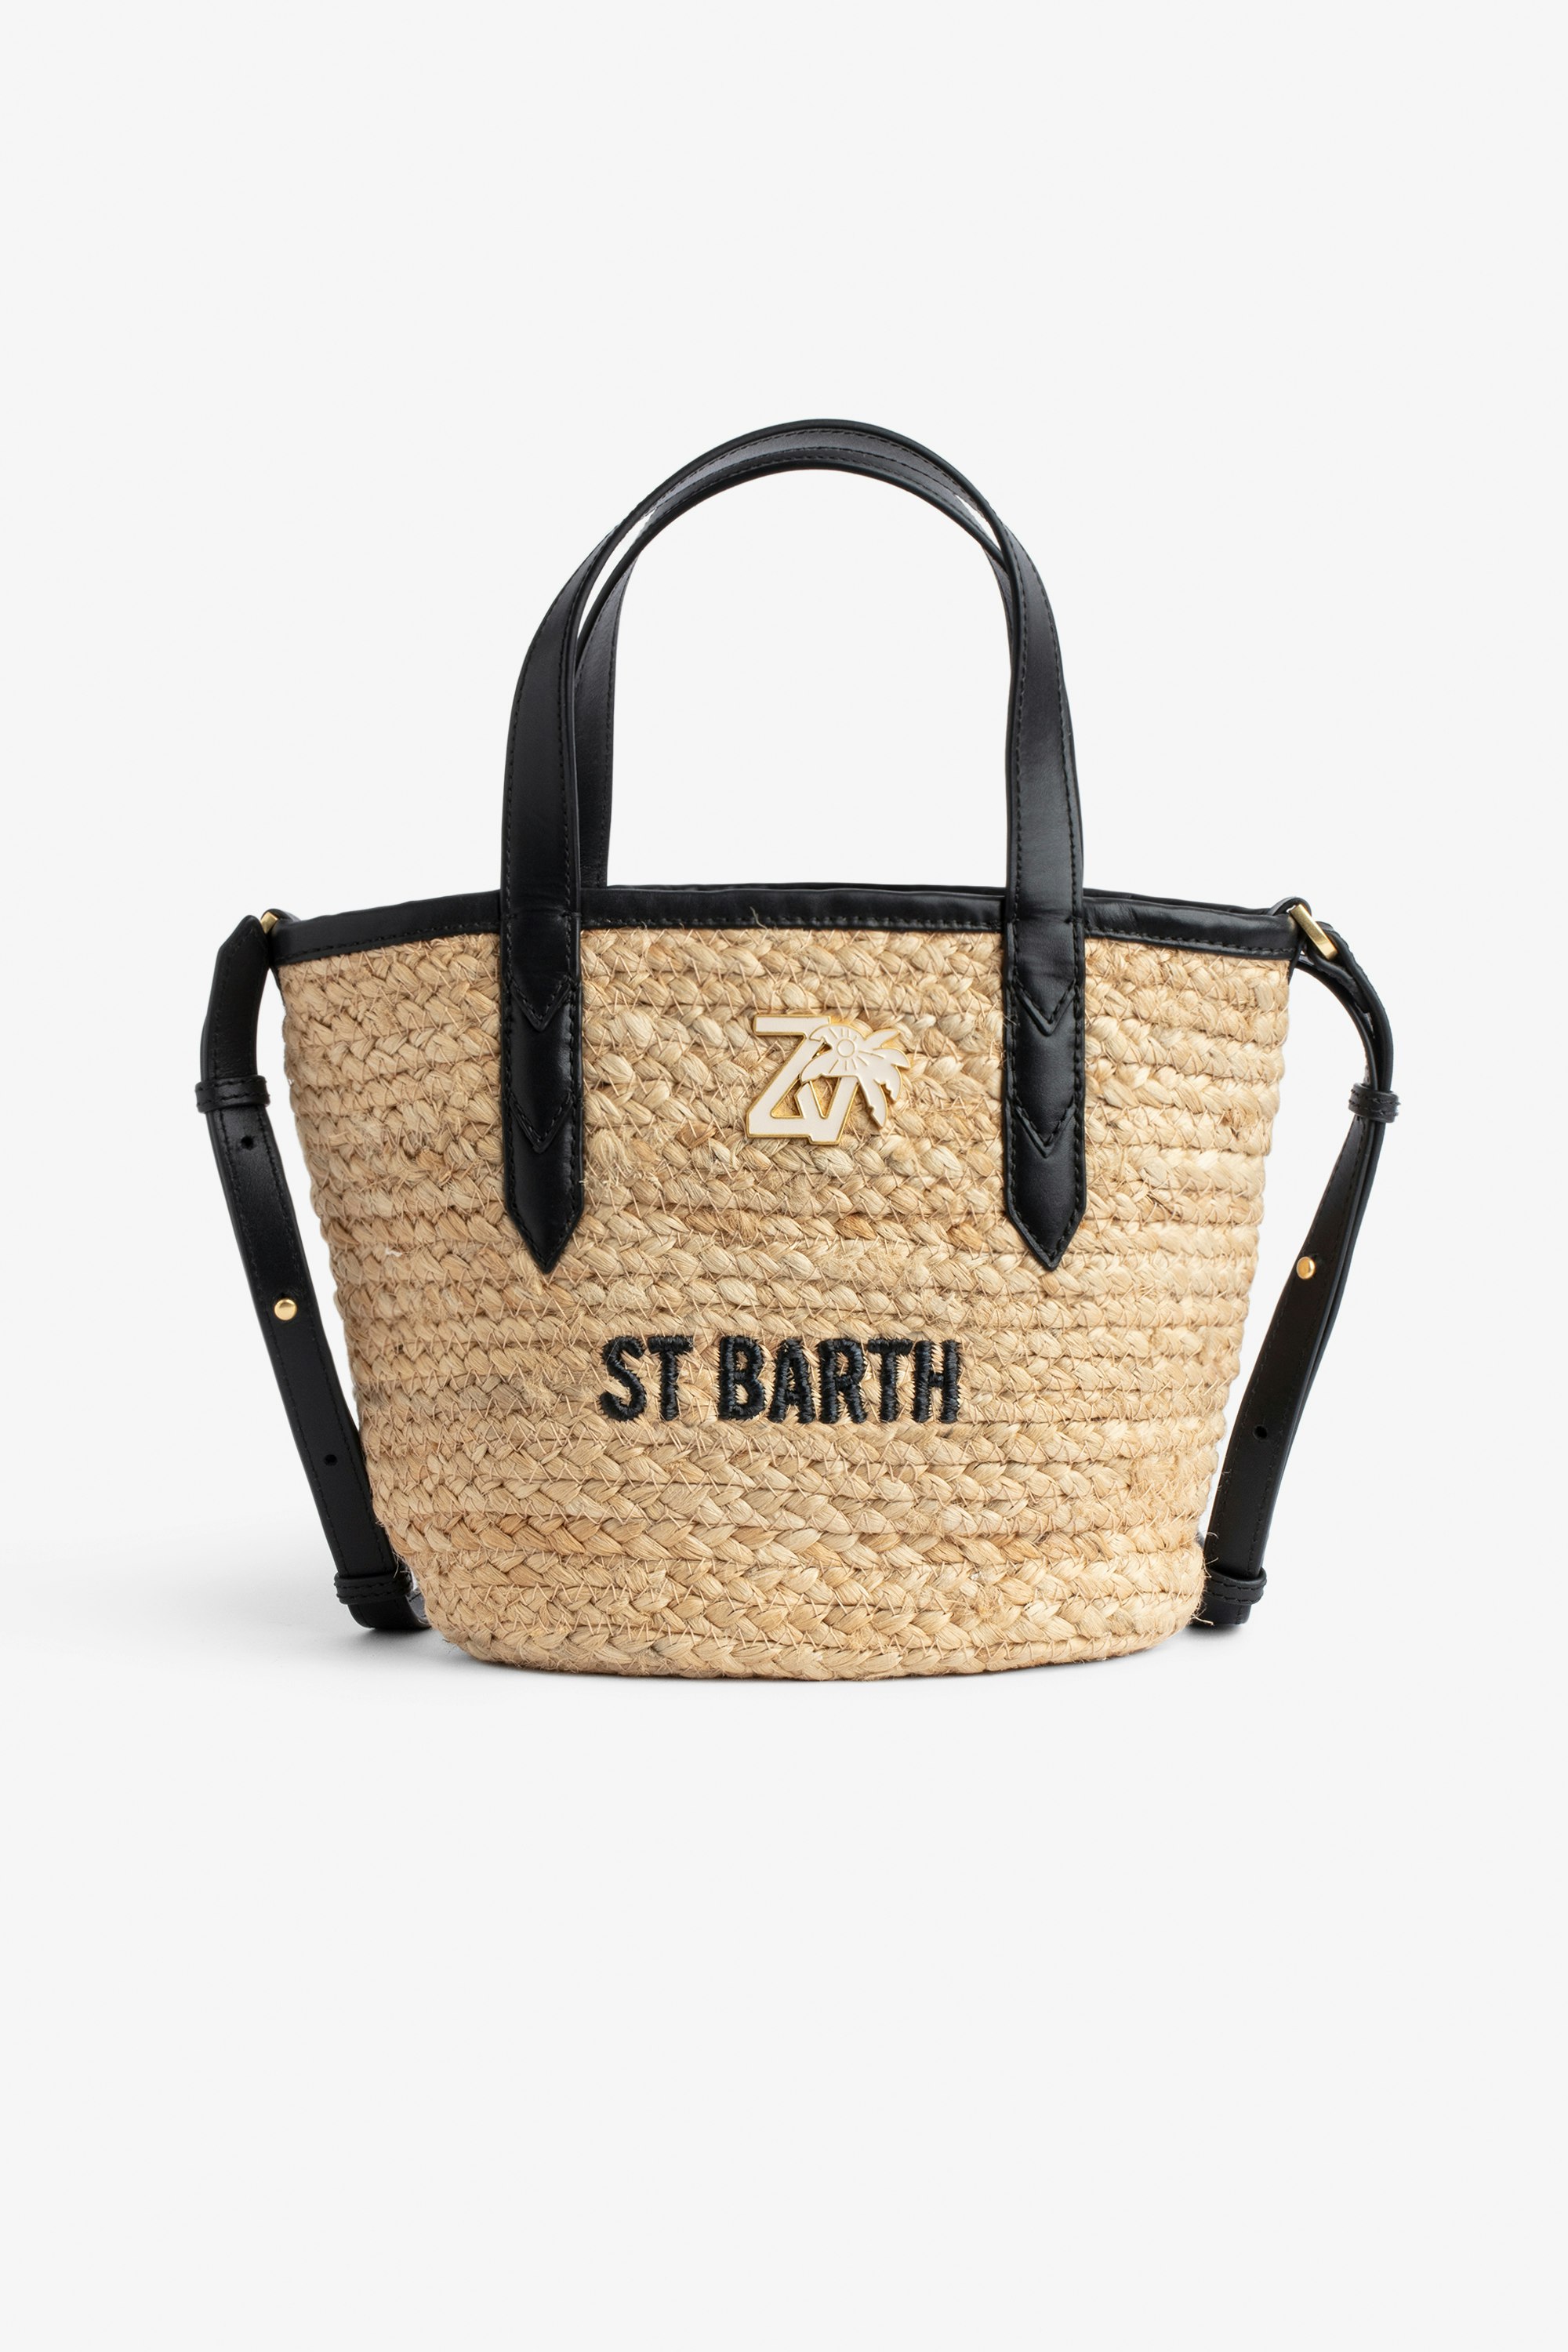 Le Baby Beach Bag ブラックレザーショルダーストラップ付きストローバッグ、「St Barth」刺繍と「ZV」のチャーム付属 レディース